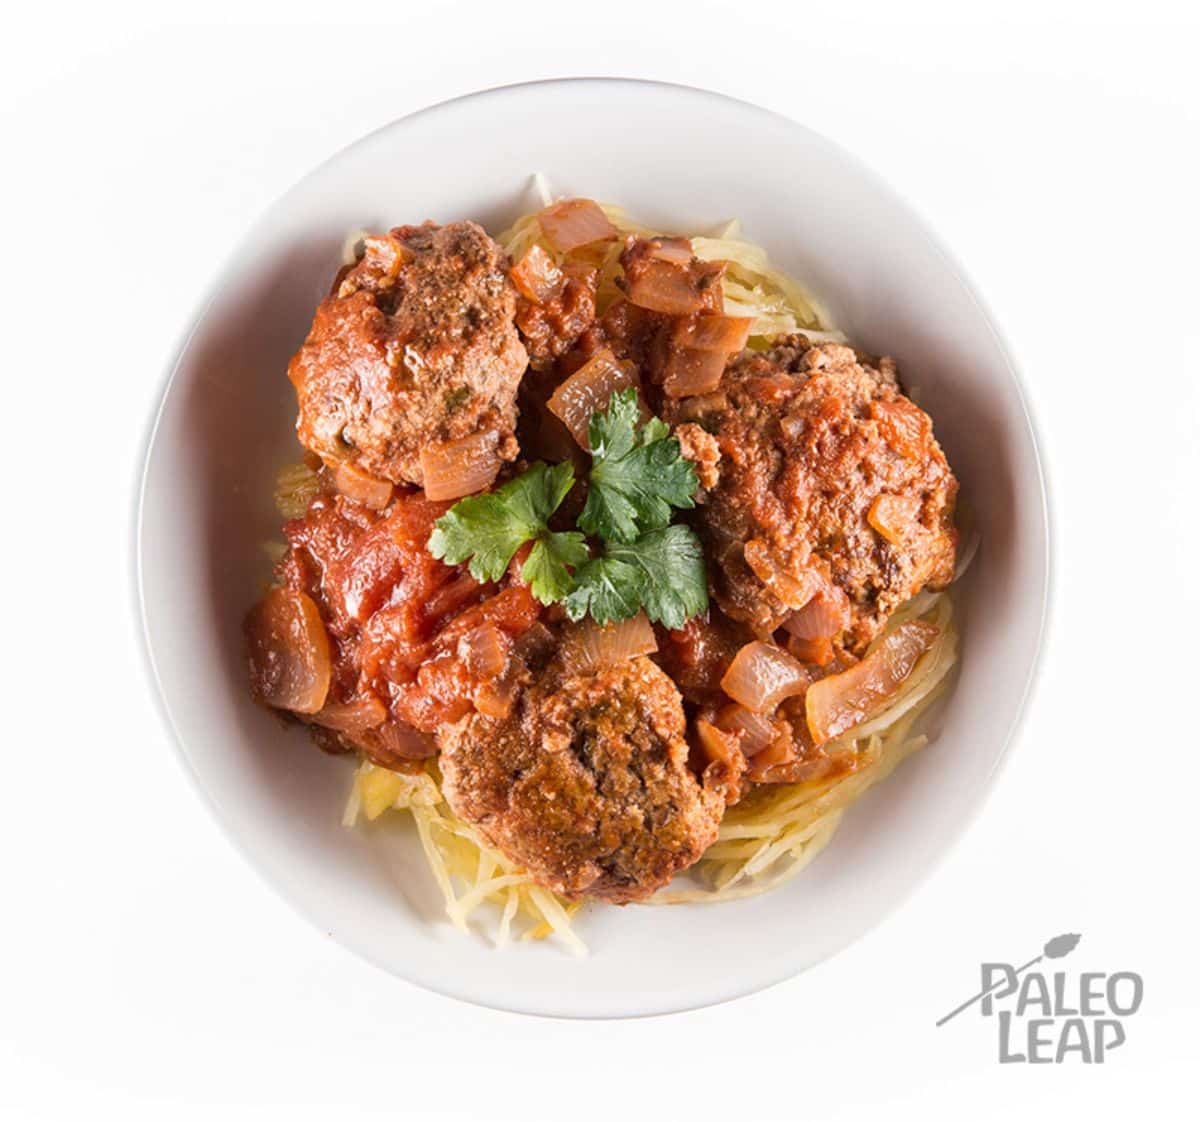 Paleo Spaghetti and Meatballs in a white bowl.